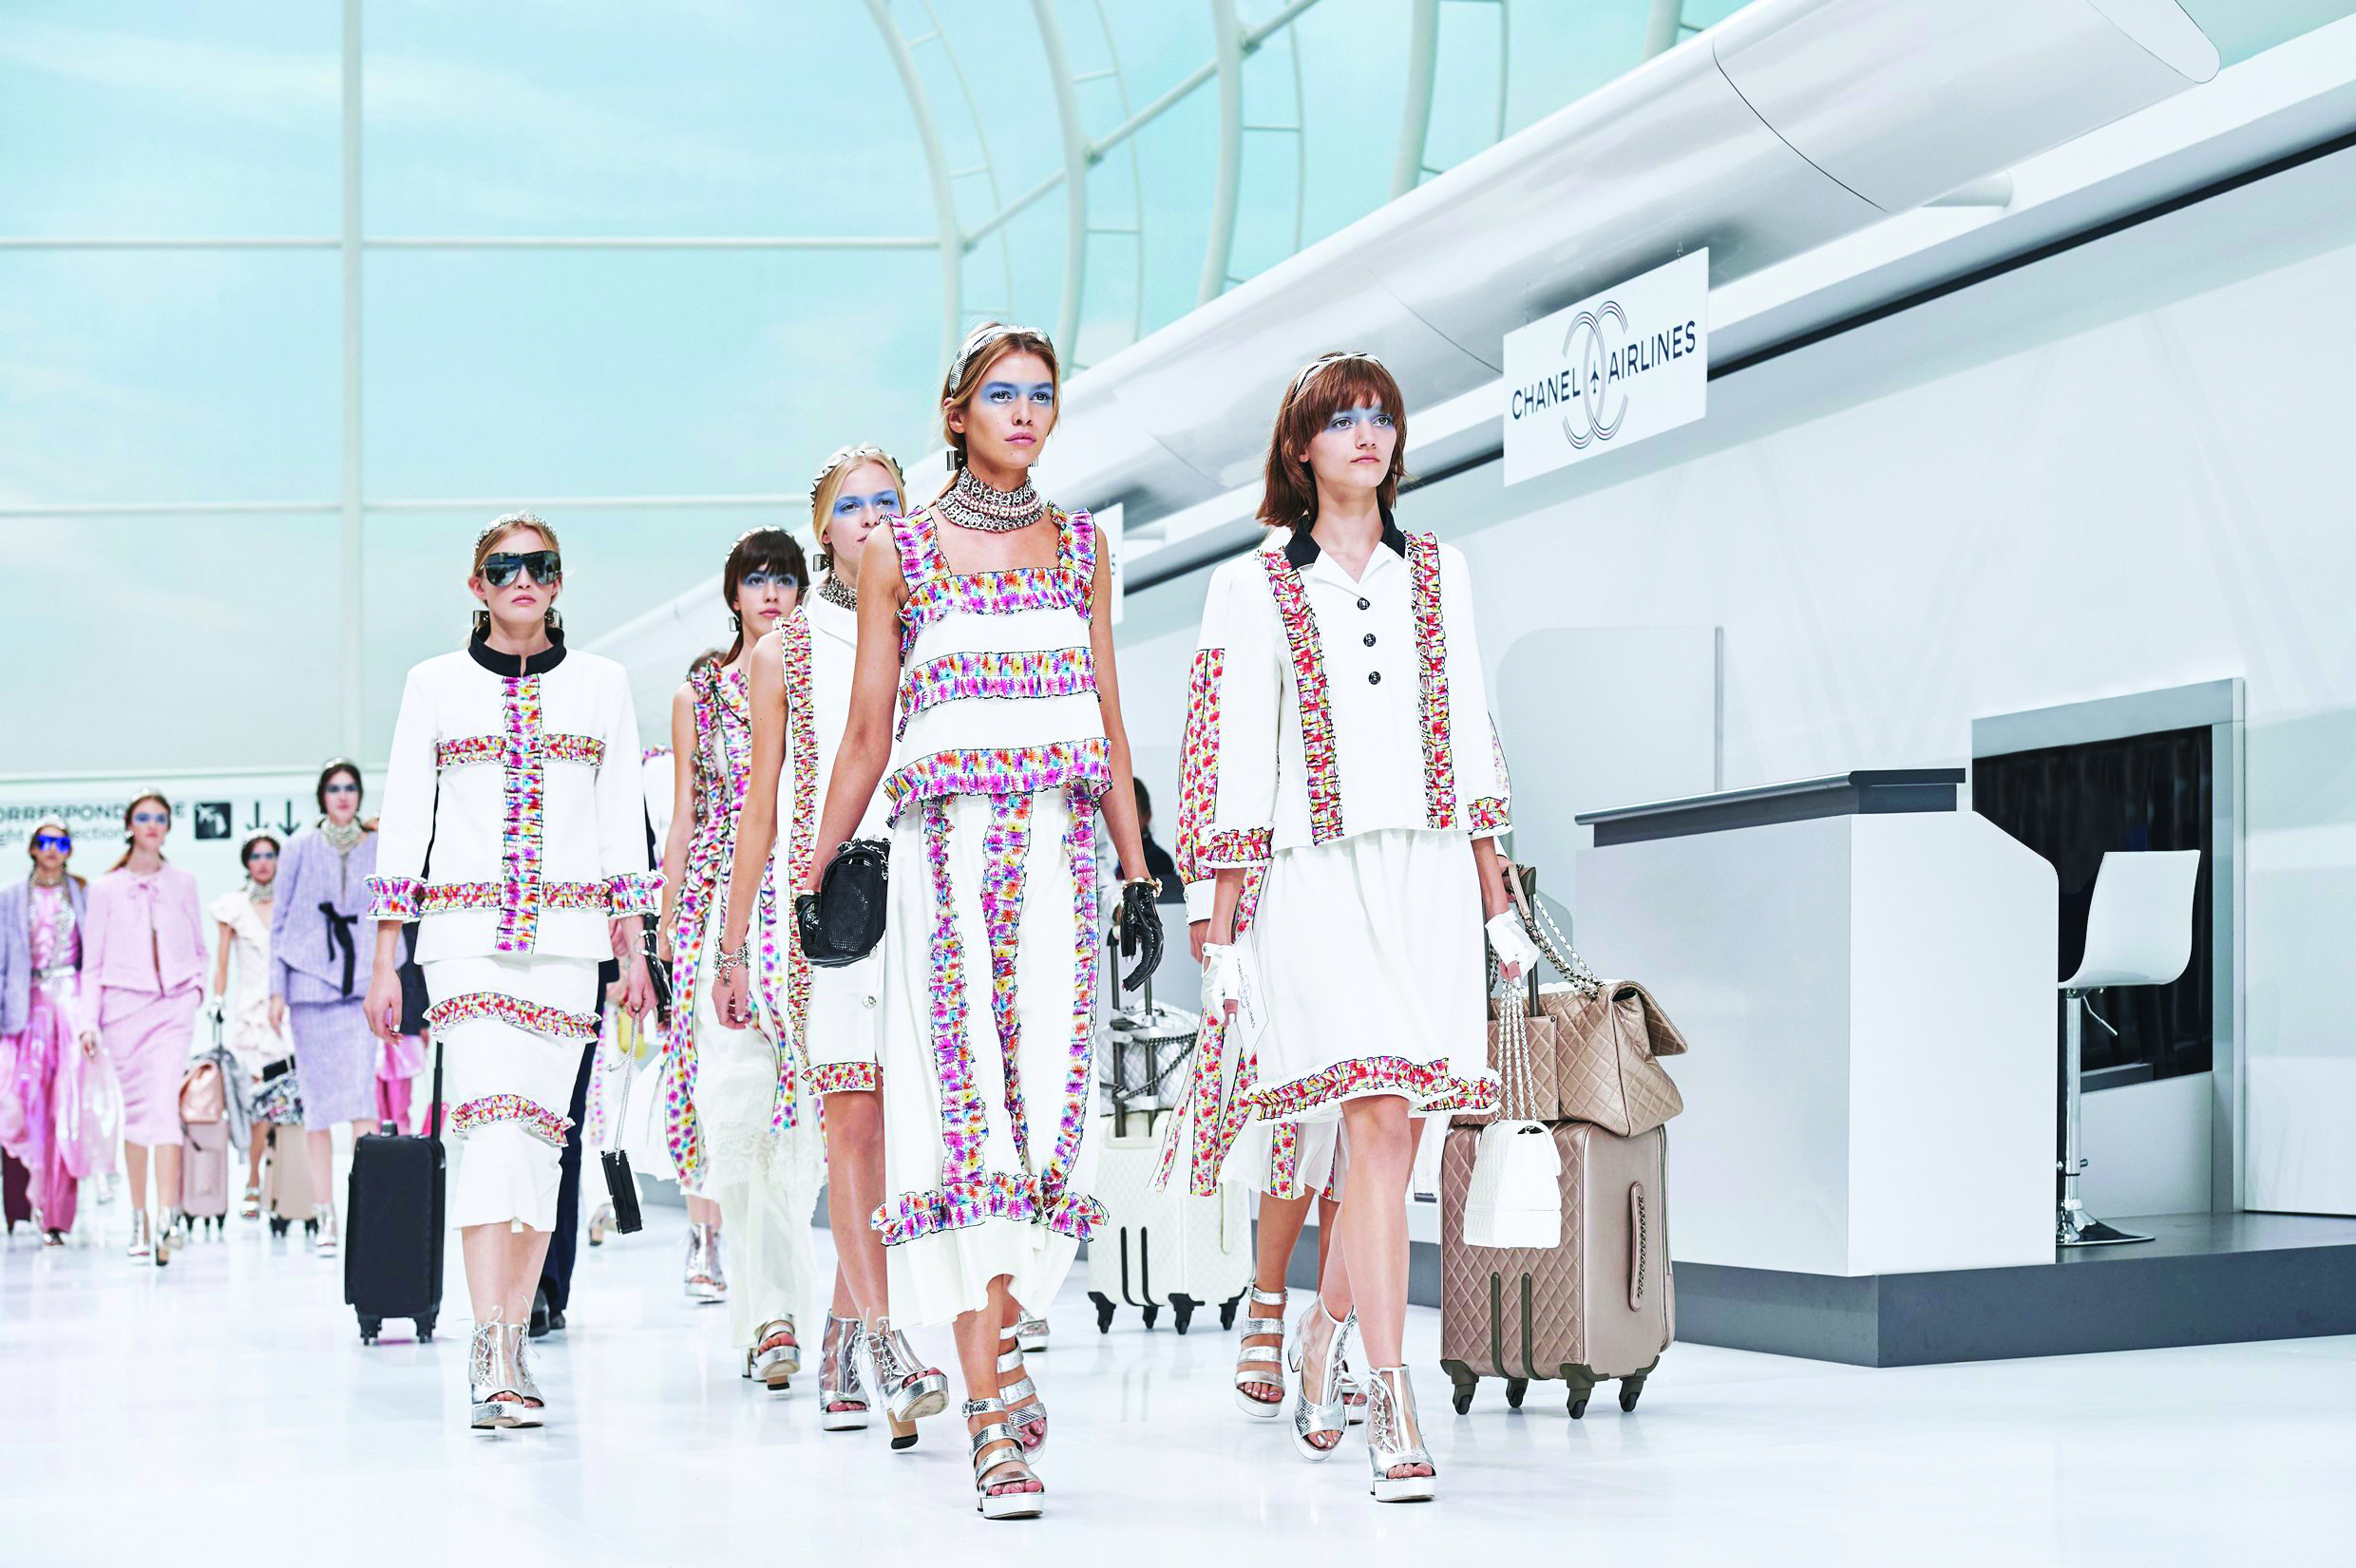 Chanel 2015 Paris fashion week show had a chic airport lounge theme.